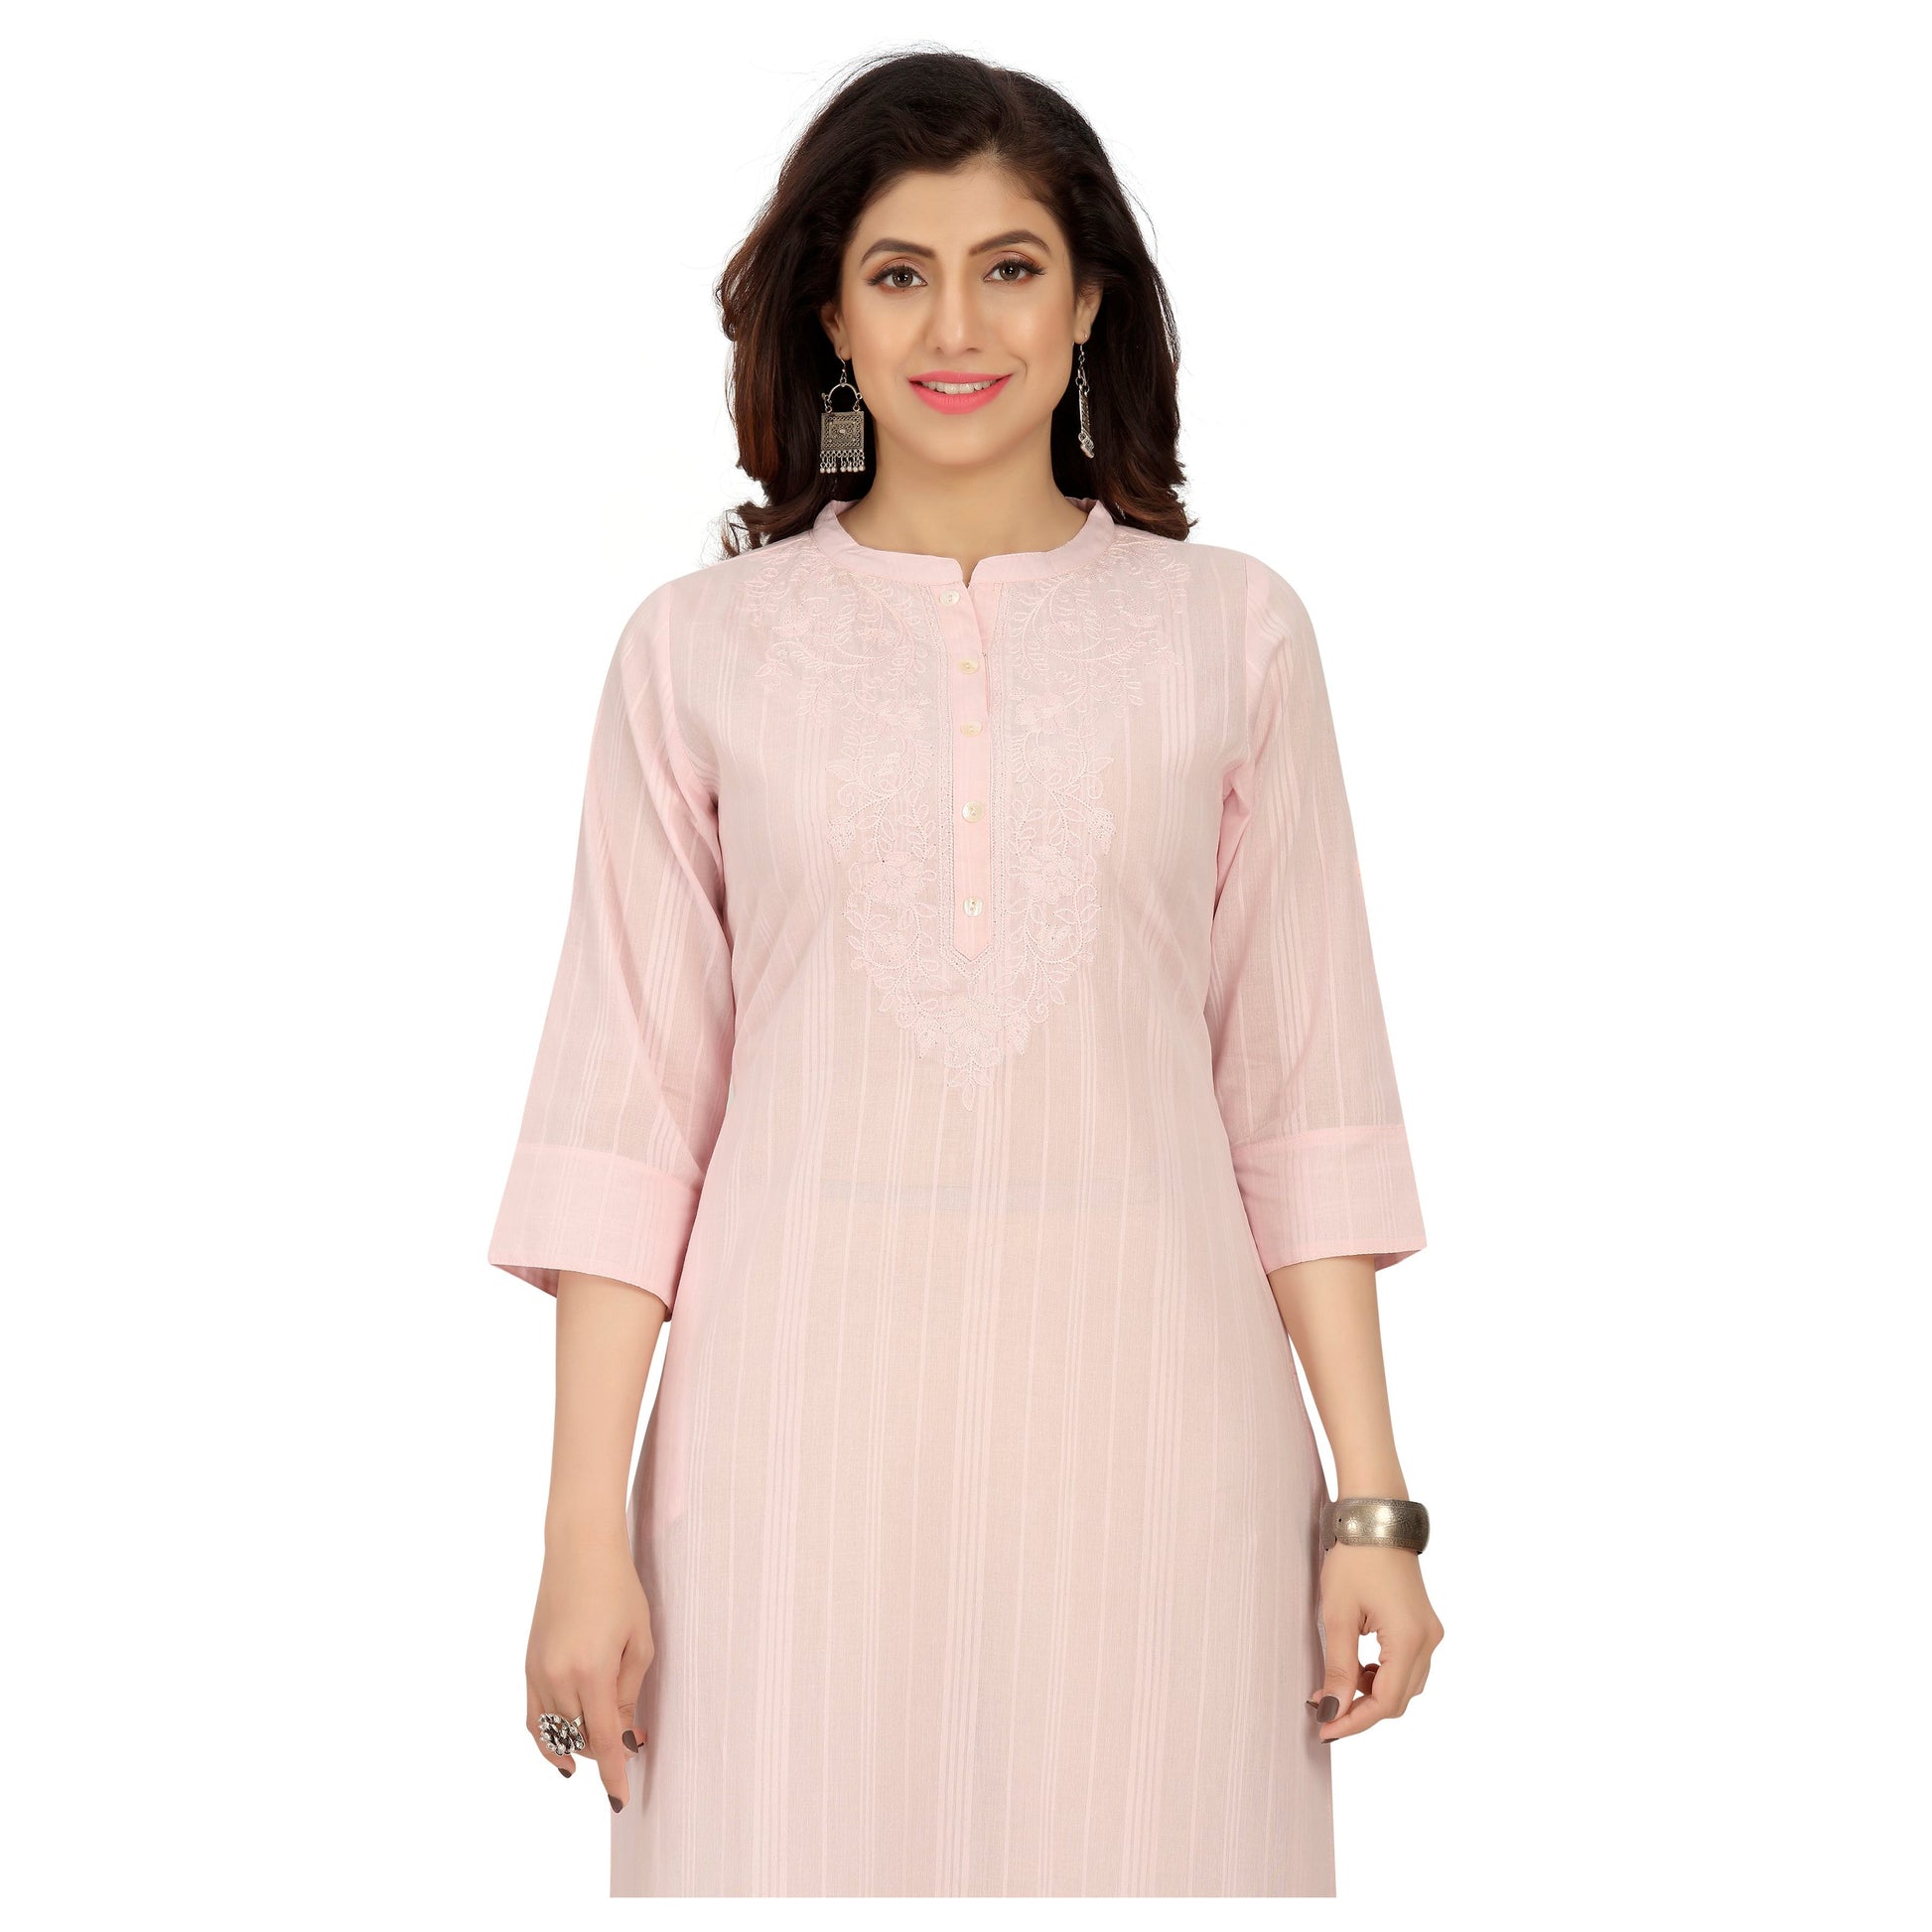 pink cotton kurta/kurti for women. Graceful Indian Kurtas for all occasions. Indian traditional wear. 